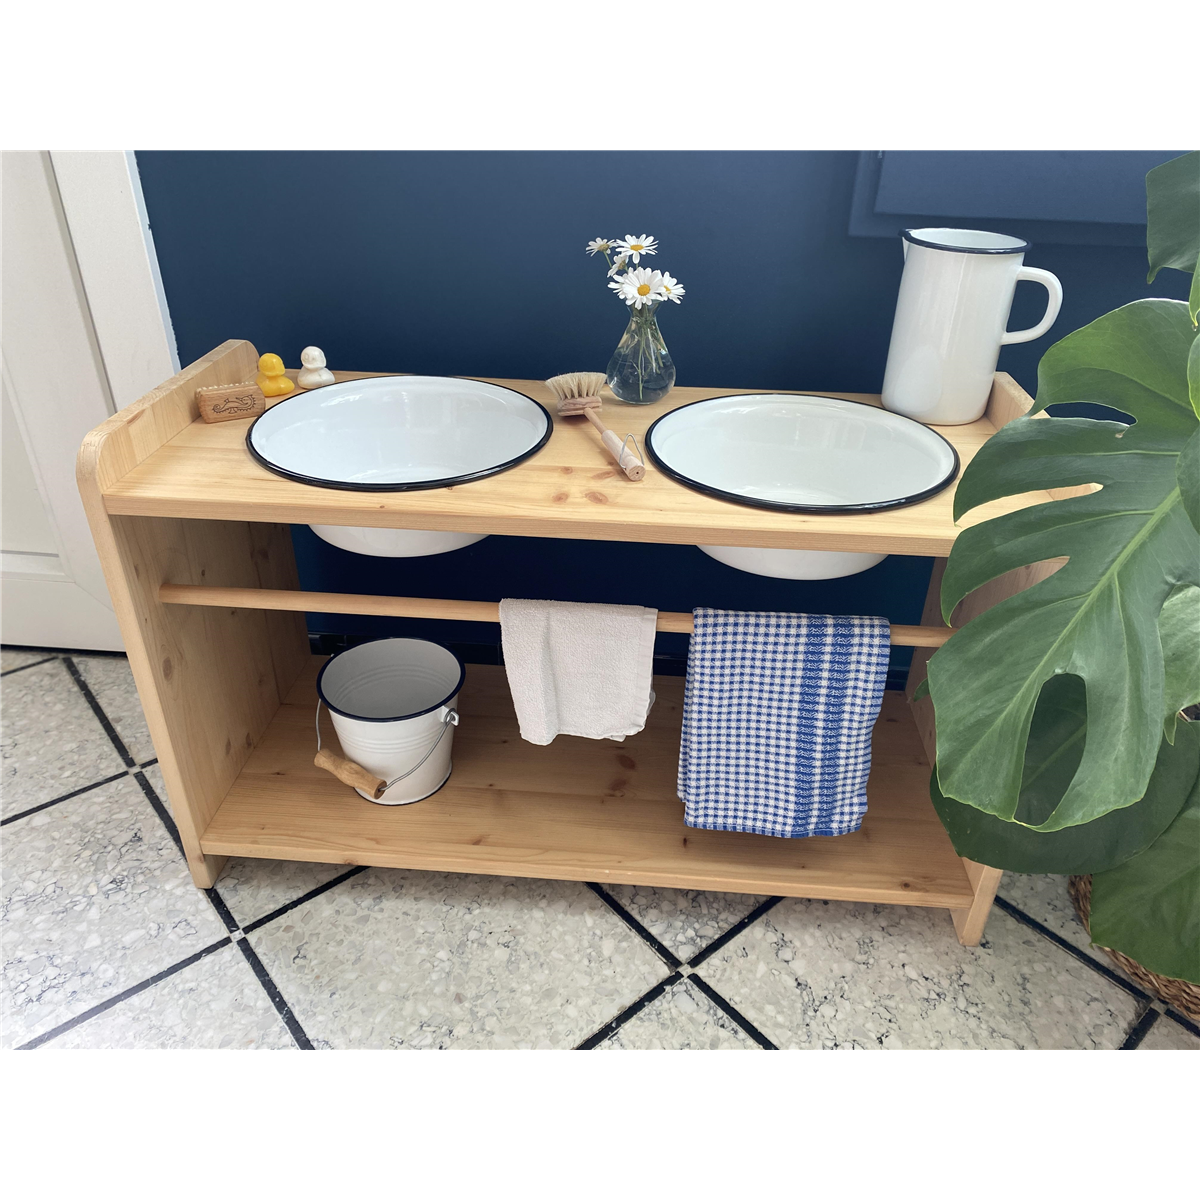 MANINE Montessori Double washing station